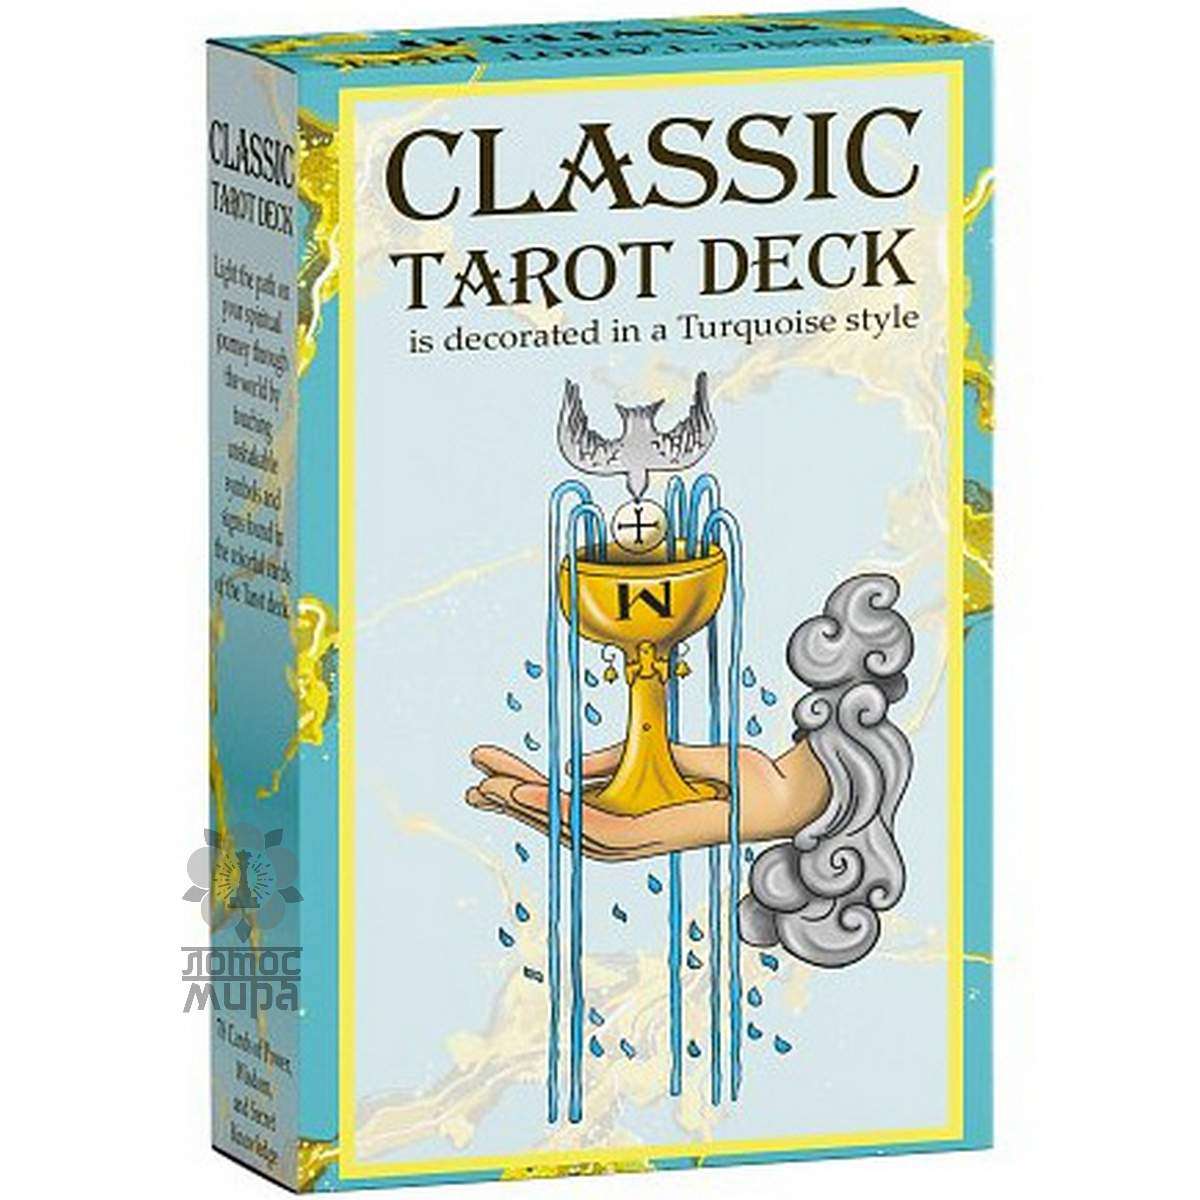 Classic tarot deck Turquoise style /Україна/